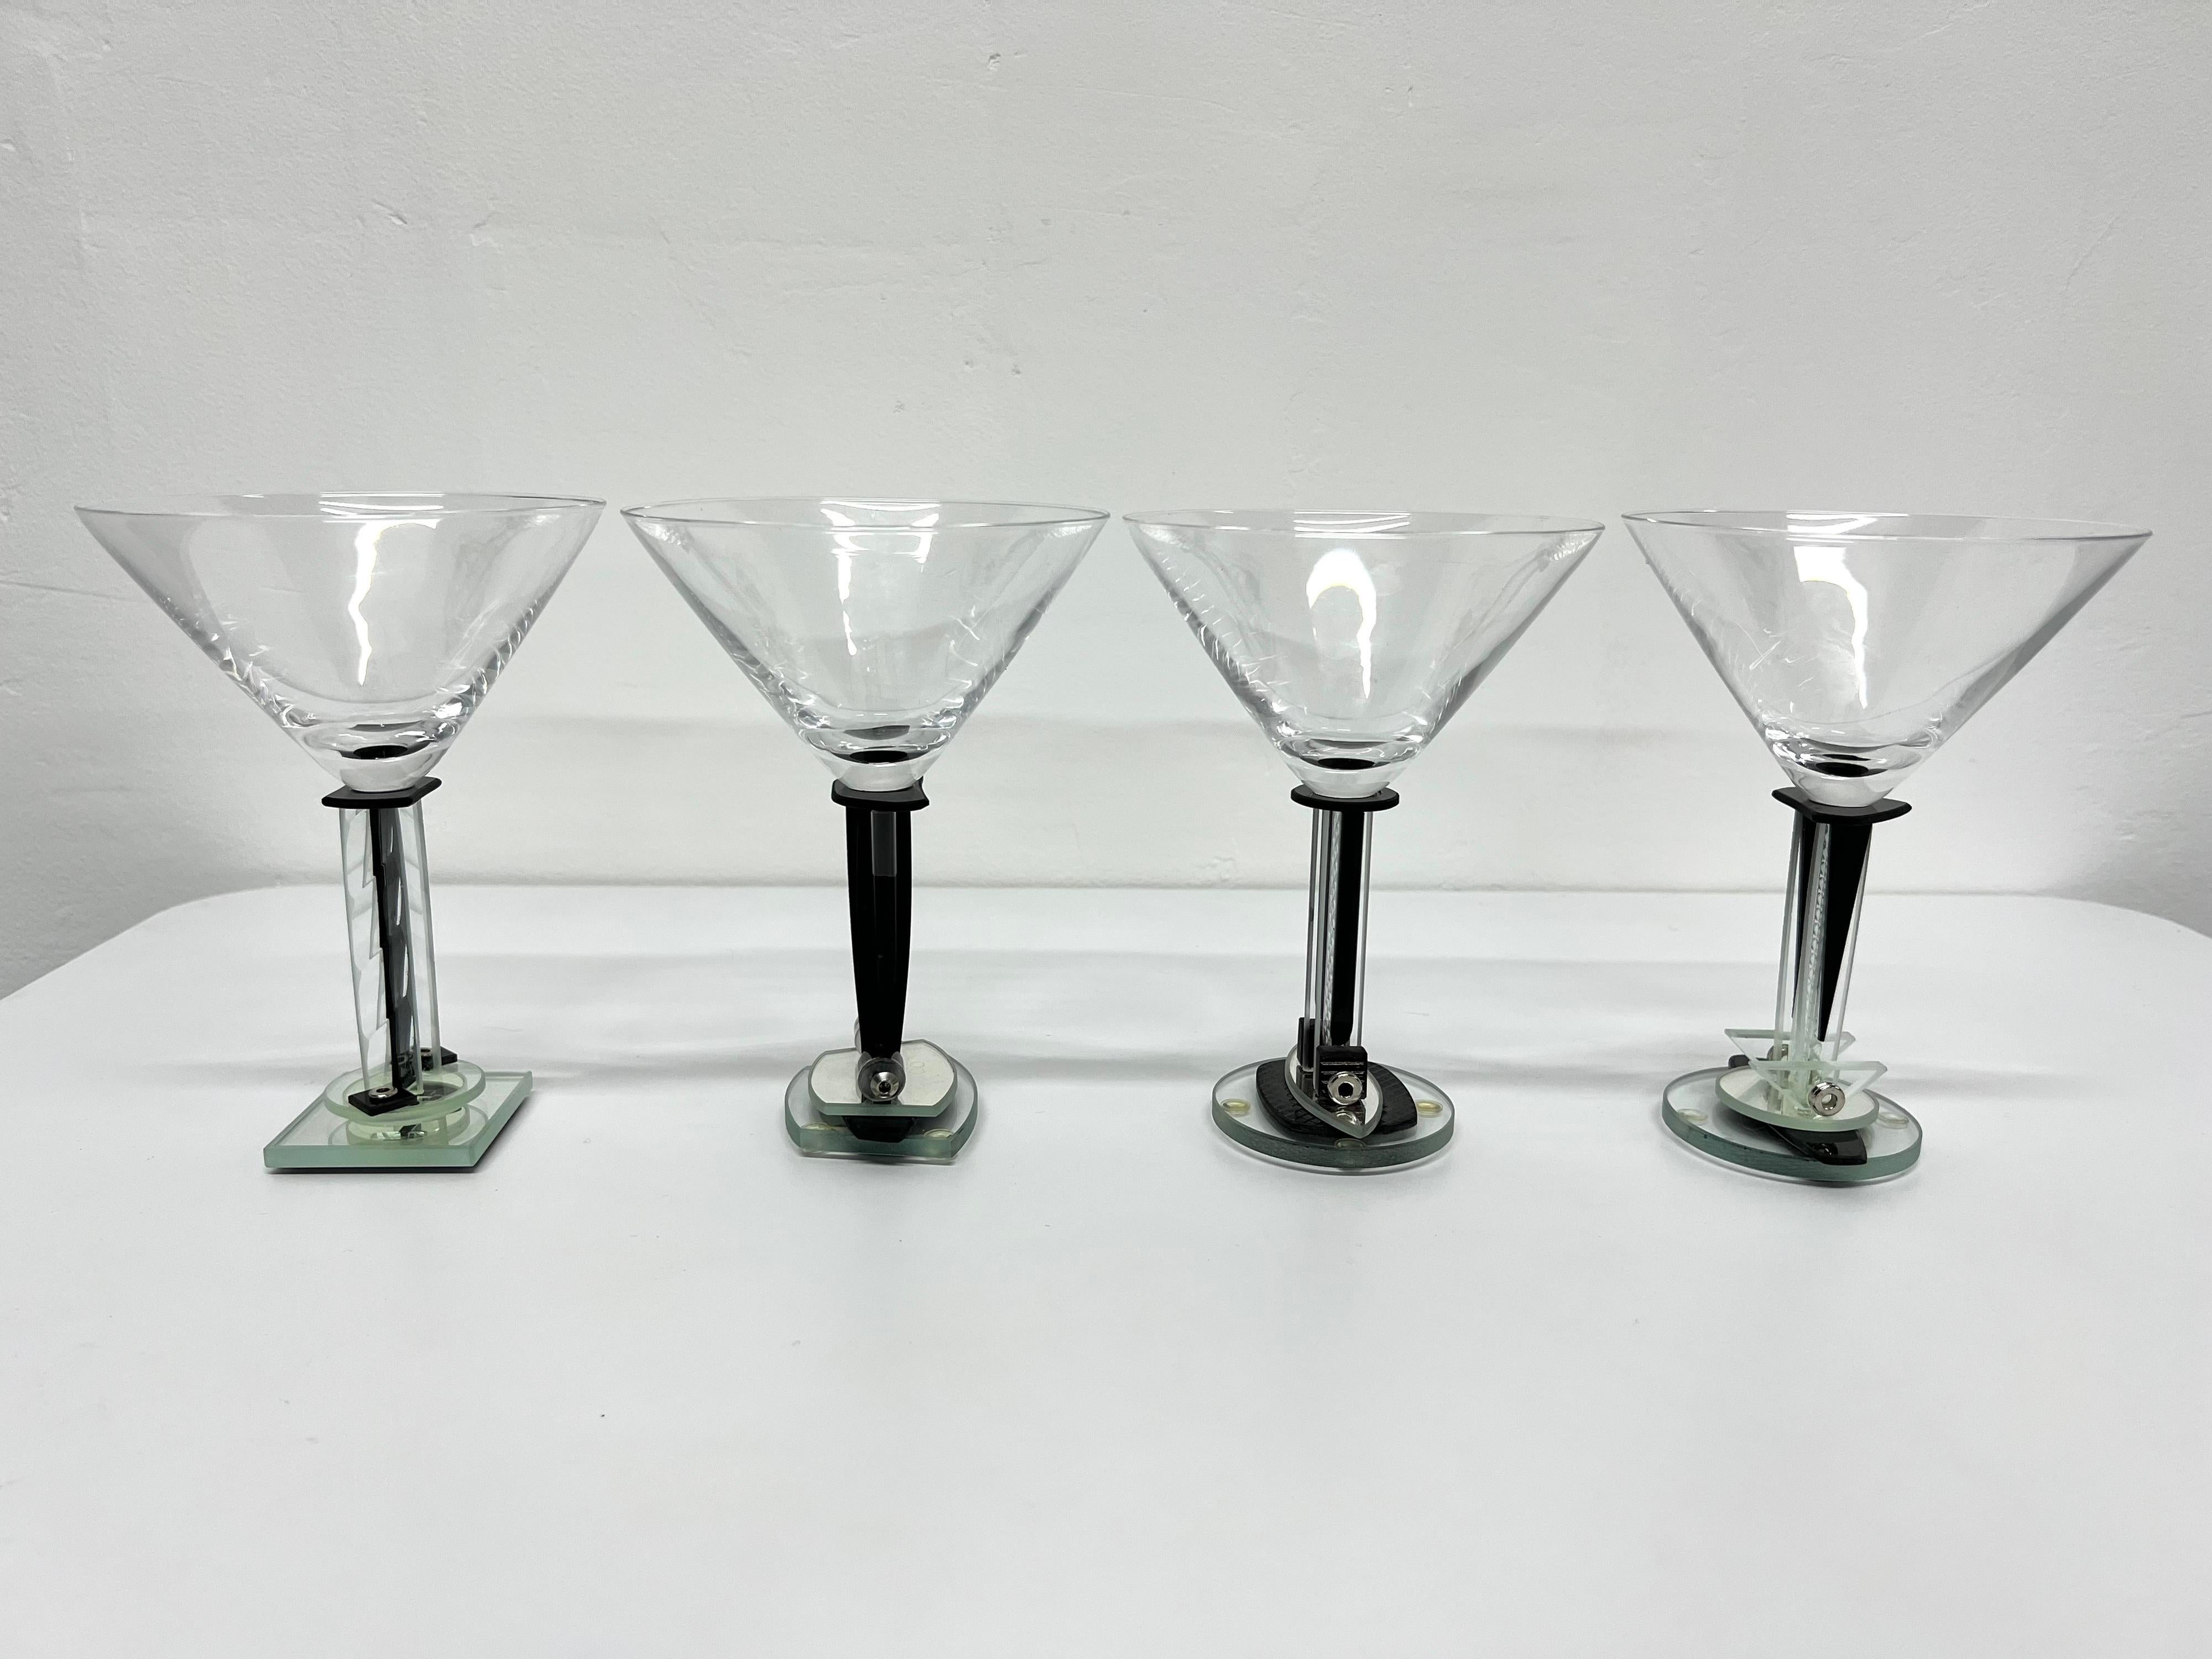 Details about   George Ponzini Art Glass Martini Set Tray Pitcher Glasses 6 Pc Set 